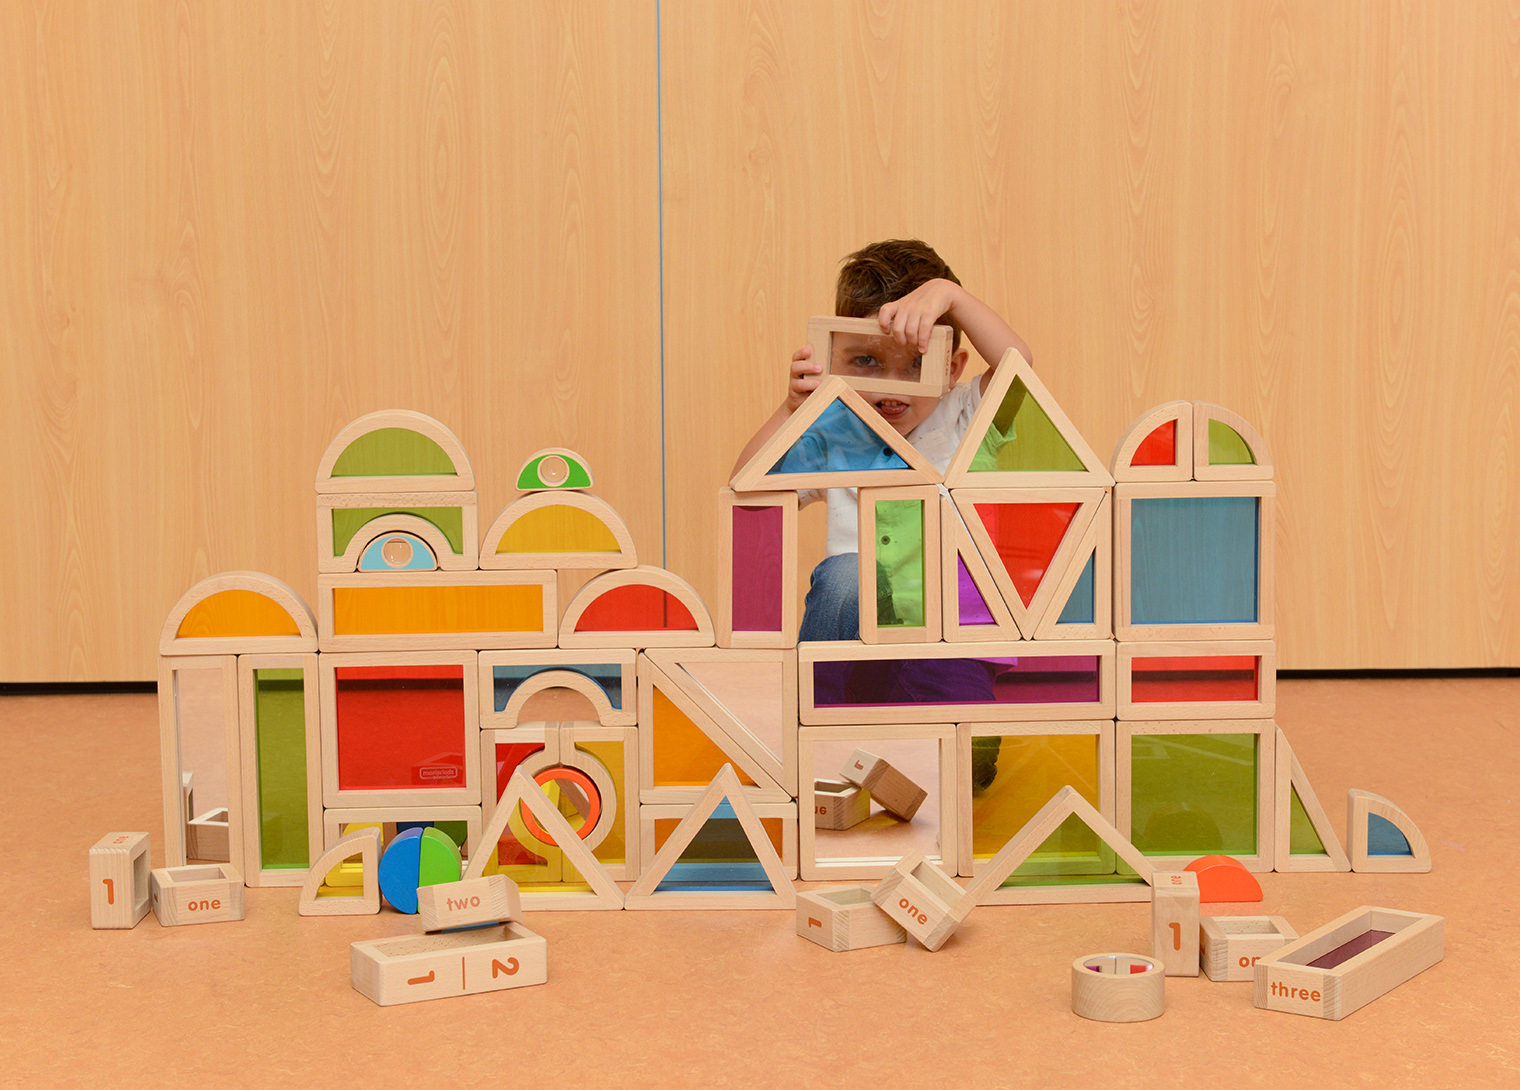 58 Pieces Rainbow Bricks Assortment Set (Rainbow Blocks and Mirror Blocks)